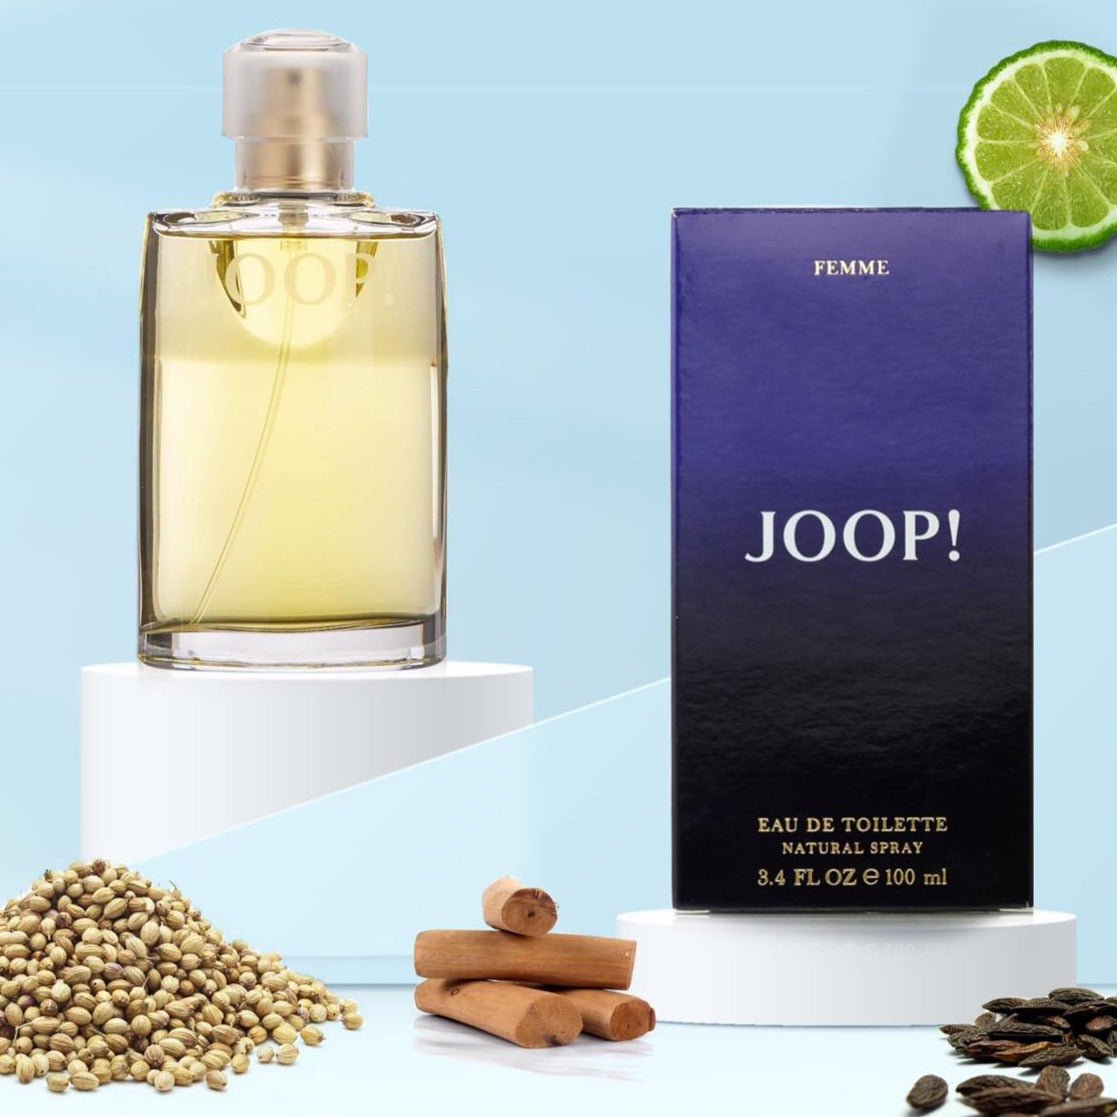 Joop! Femme EDT | My Perfume Shop Australia